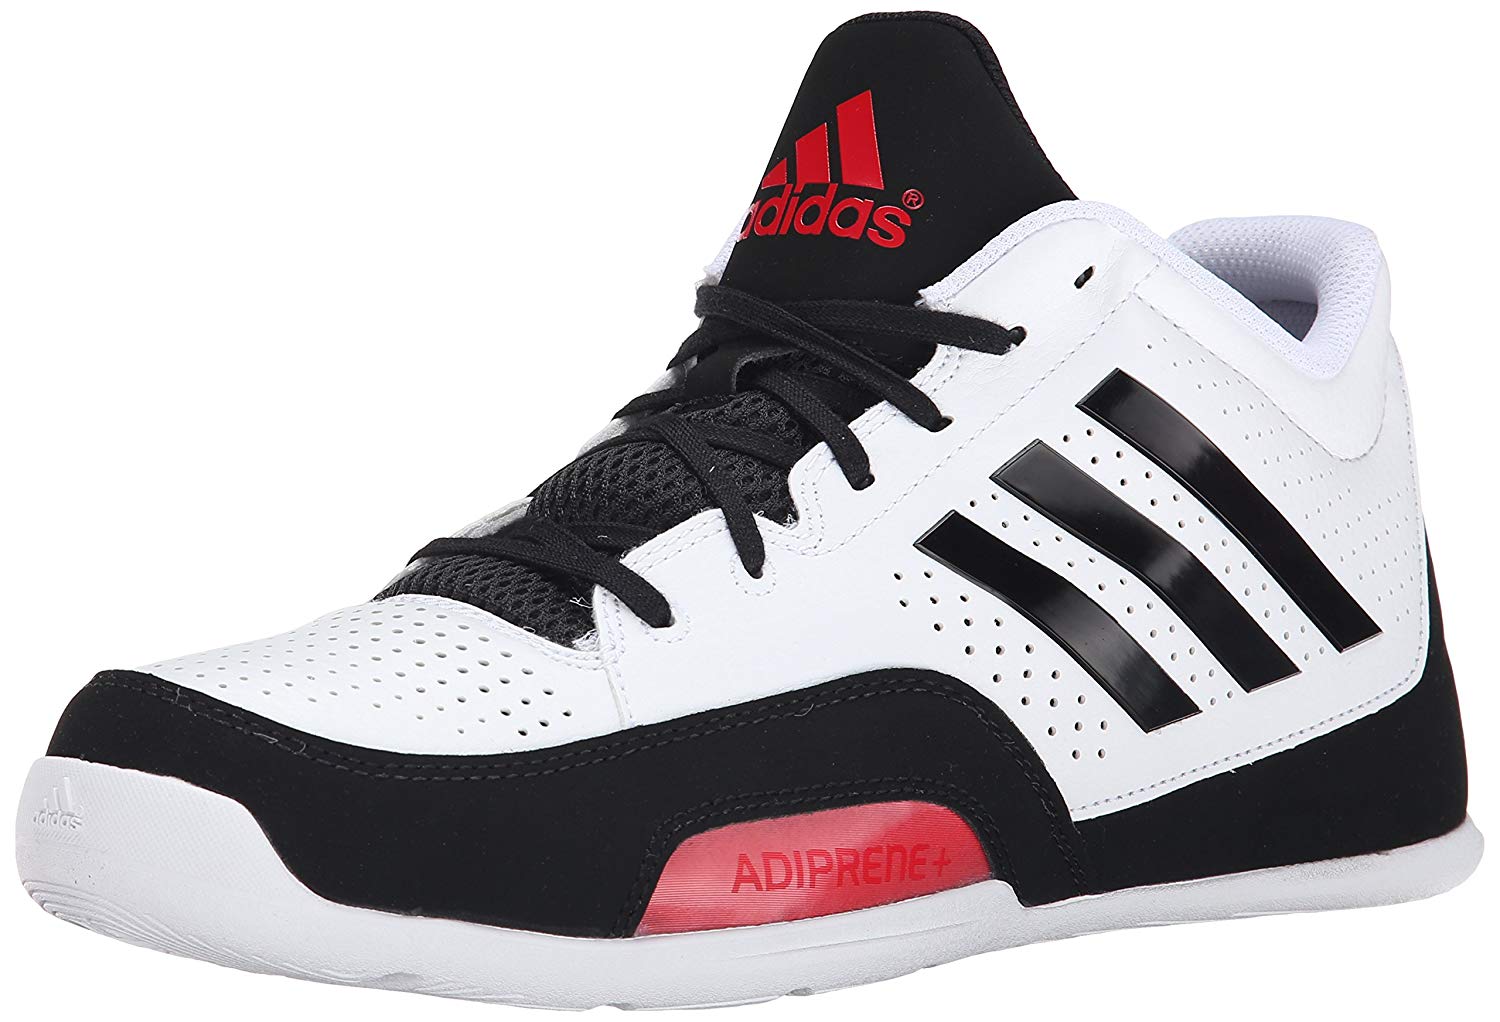 adidas adiprene plus basketball shoes 